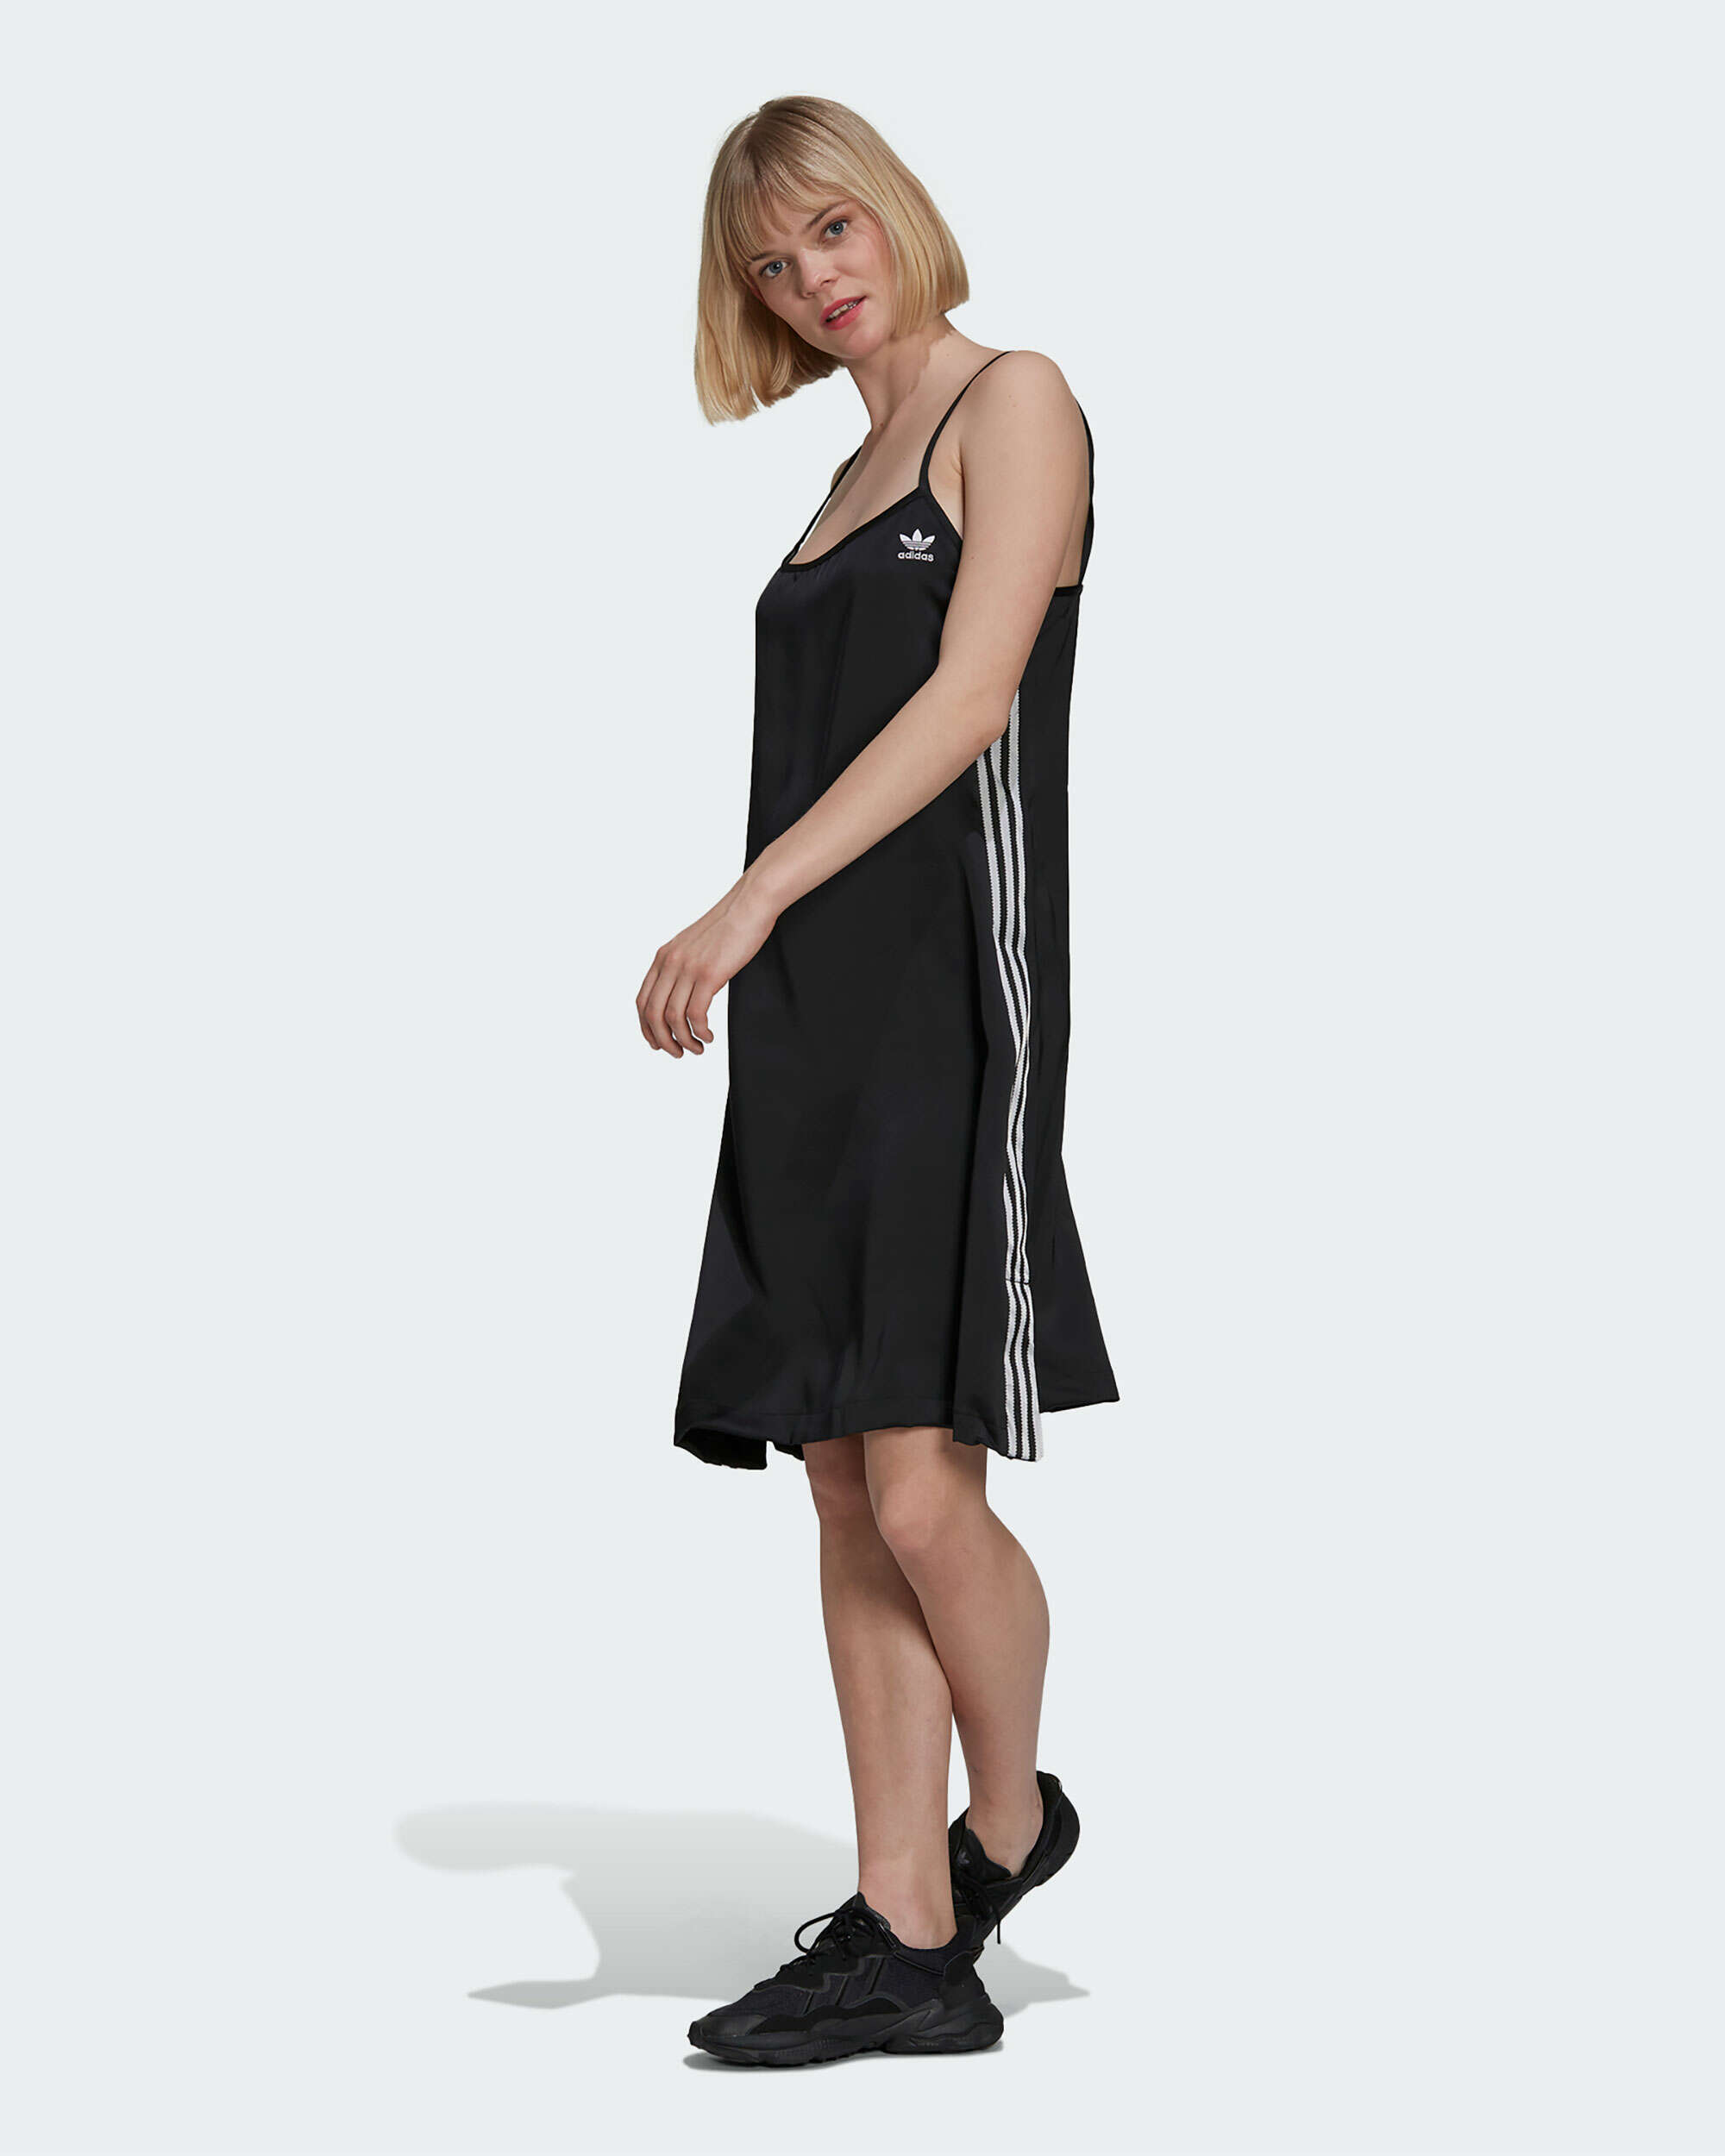 Online at Classics adidas FOOTDISTRICT Dress Buy H33694| Women\'s Black Satin